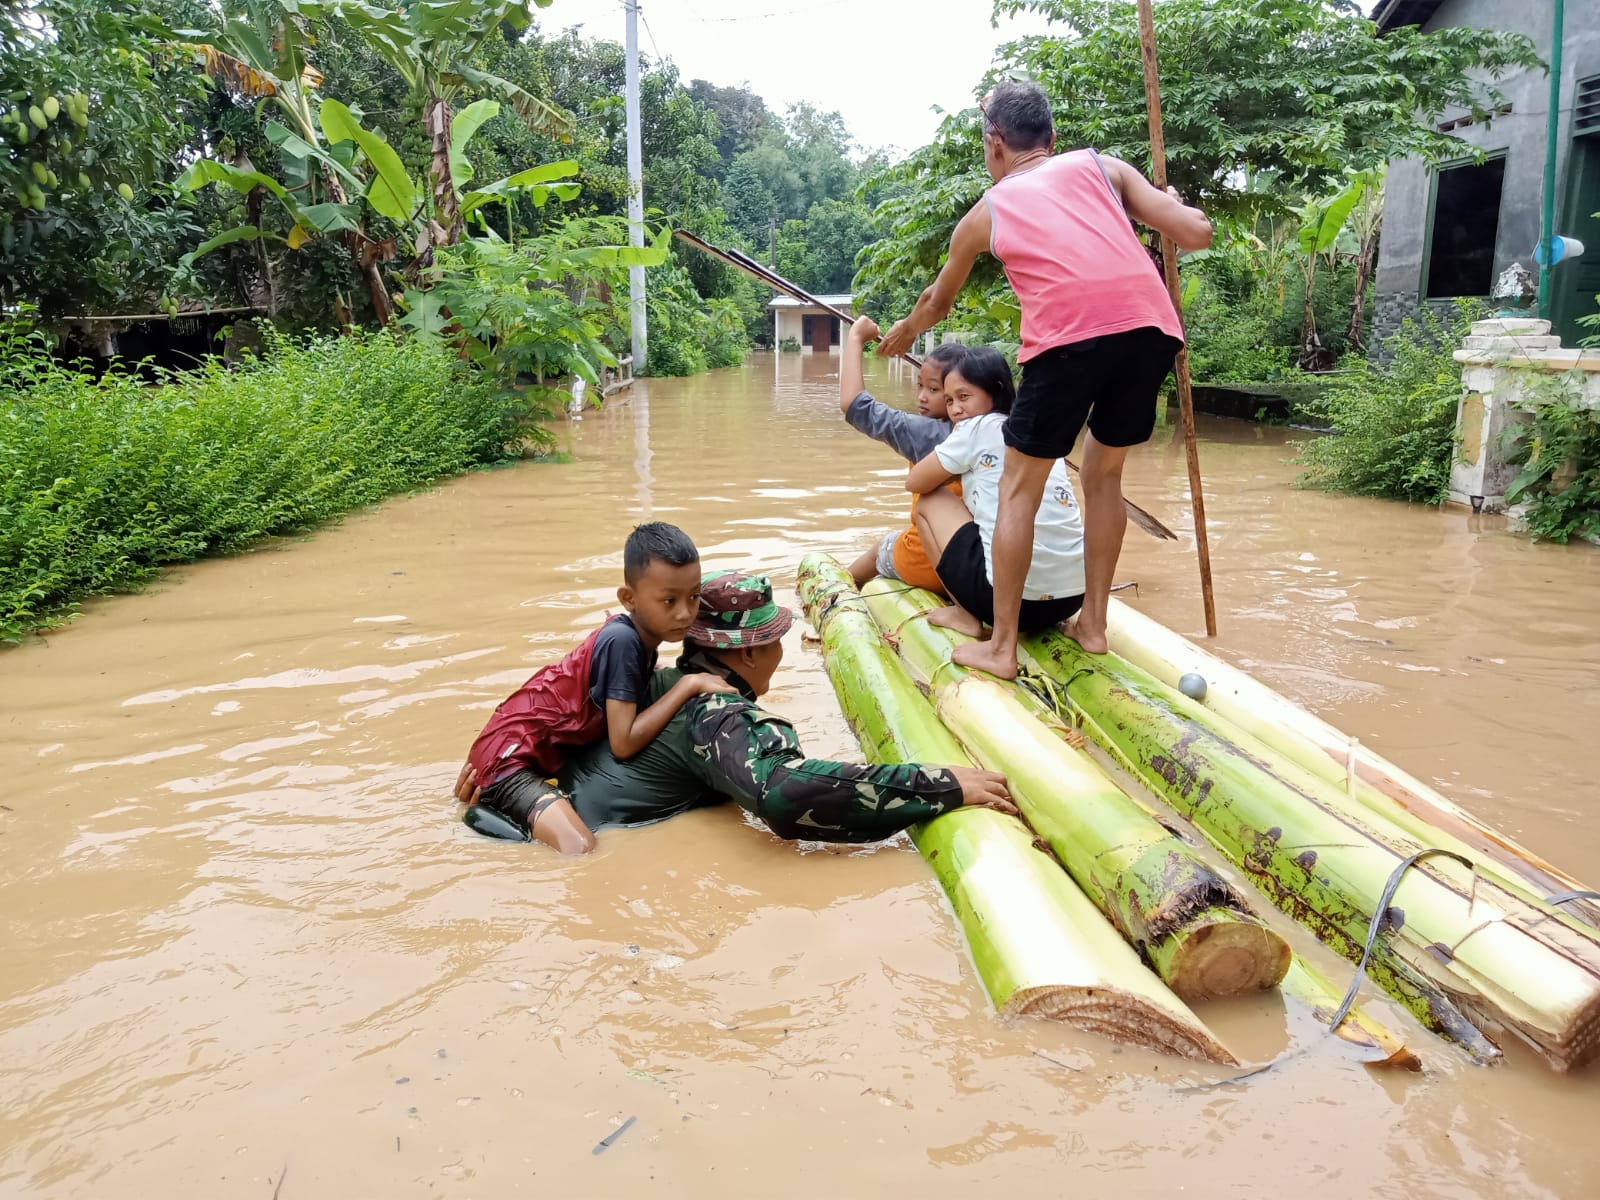 TNI-Polri, SAR, Relawan dan Masyarakat bersinergi Evakuasi dan salurkan bantuan akibat banjir di desa Kadokan Grogol